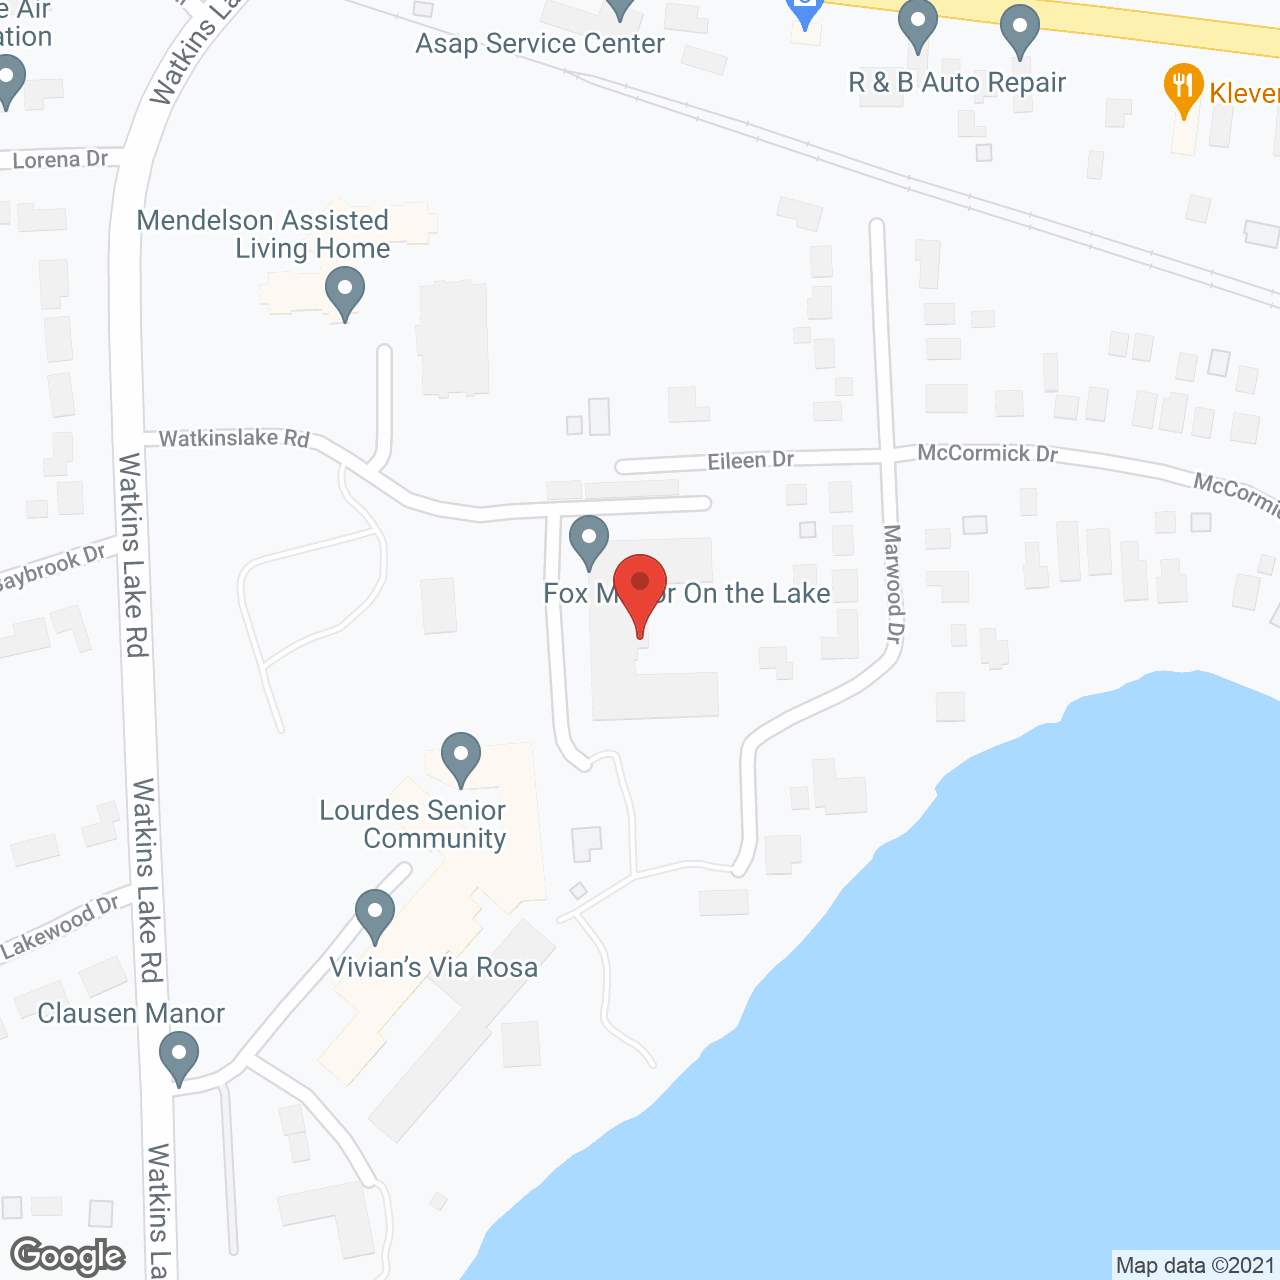 Lourdes Senior Community in google map